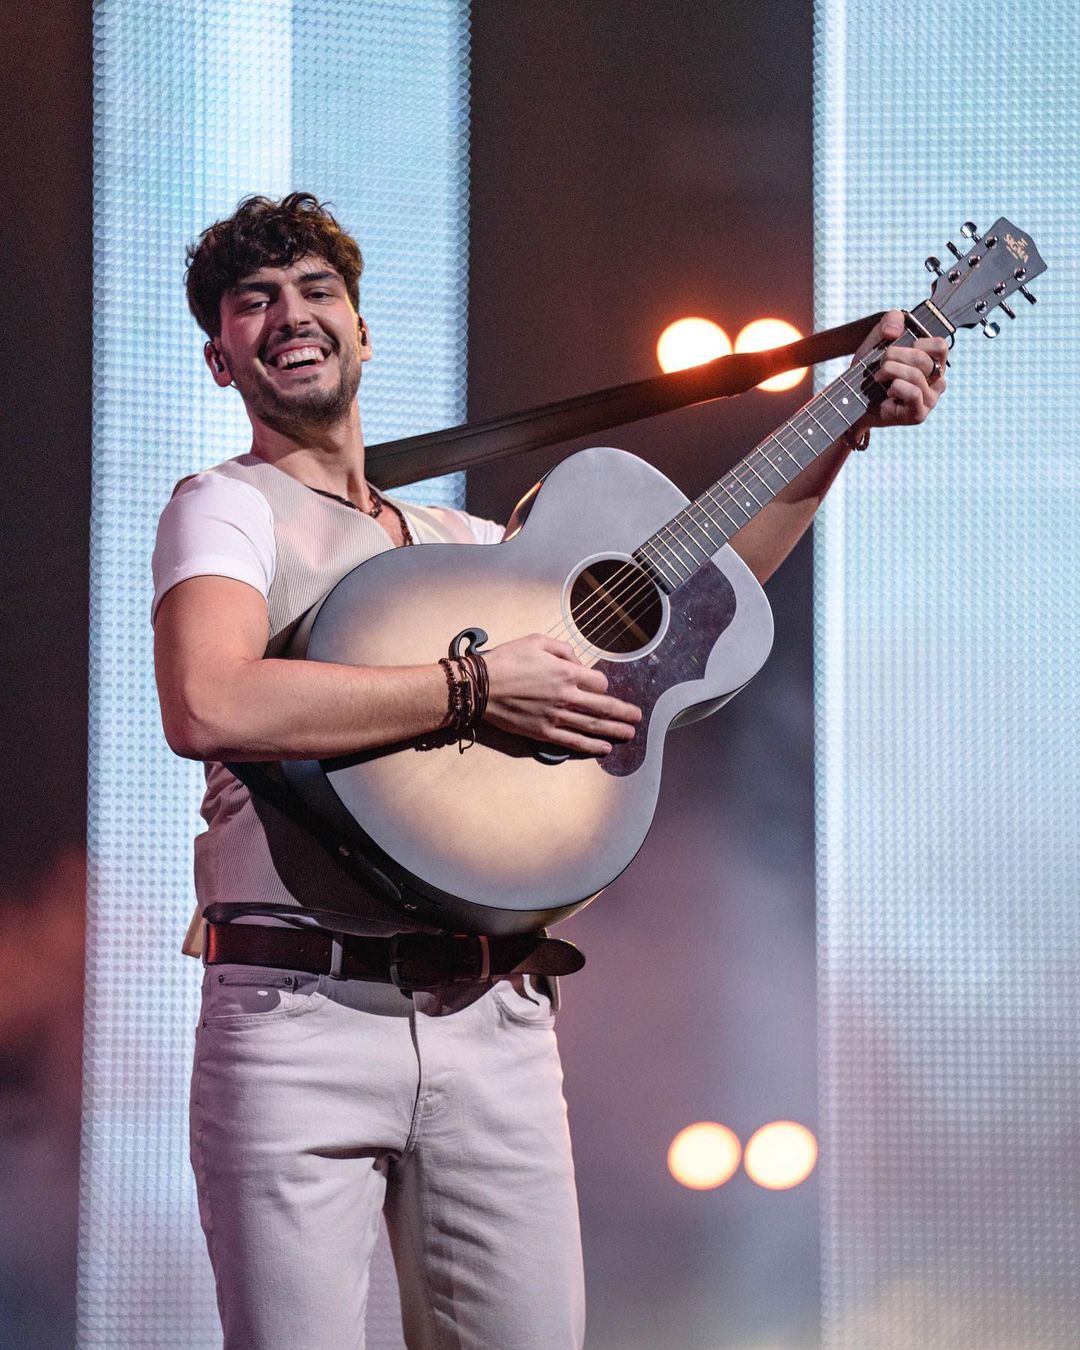 Armenian Stefan Airapetjan Will Represent Estonia At Eurovision 2022 With Song "Hope"